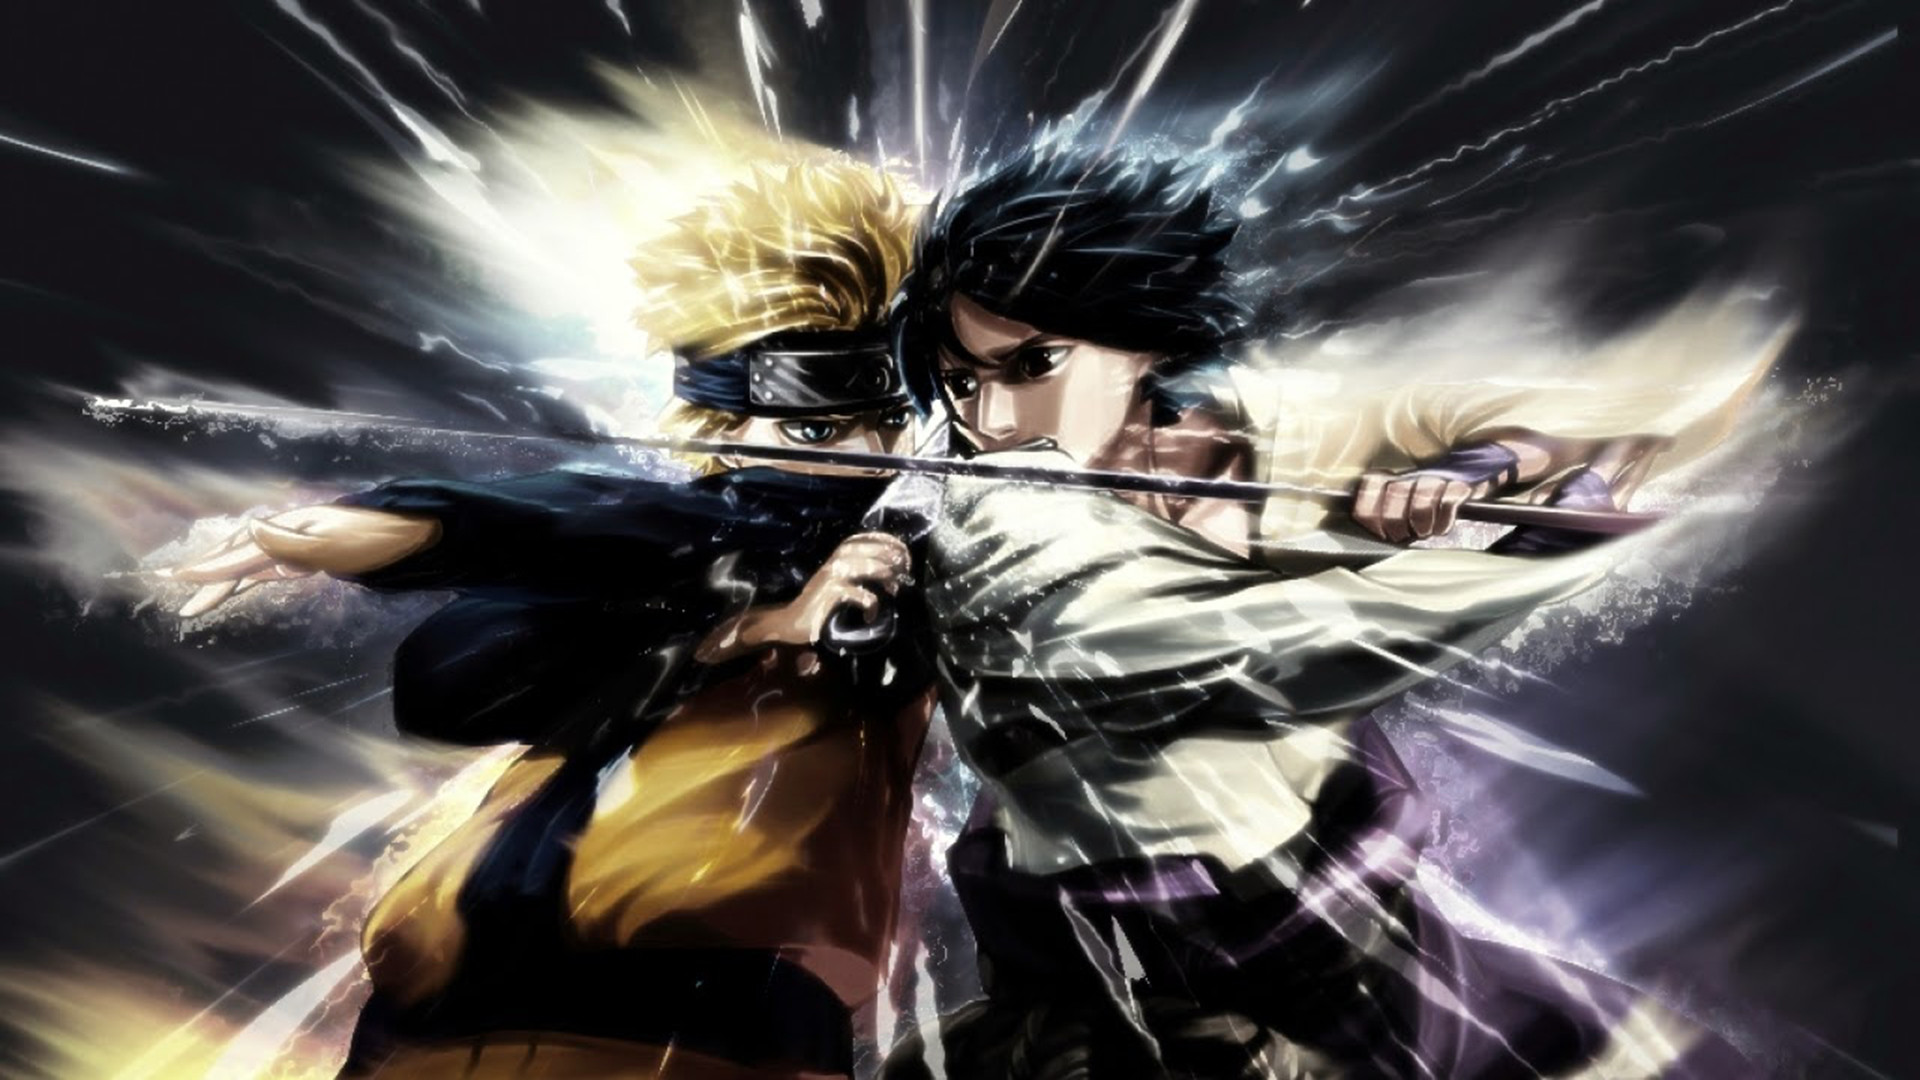 1920x1080 Naruto vs Sasuke Fighting HD desktop wallpaper : Widescreen Imagenes De  Naruto Y Sasuke Wallpapers Wallpapers)